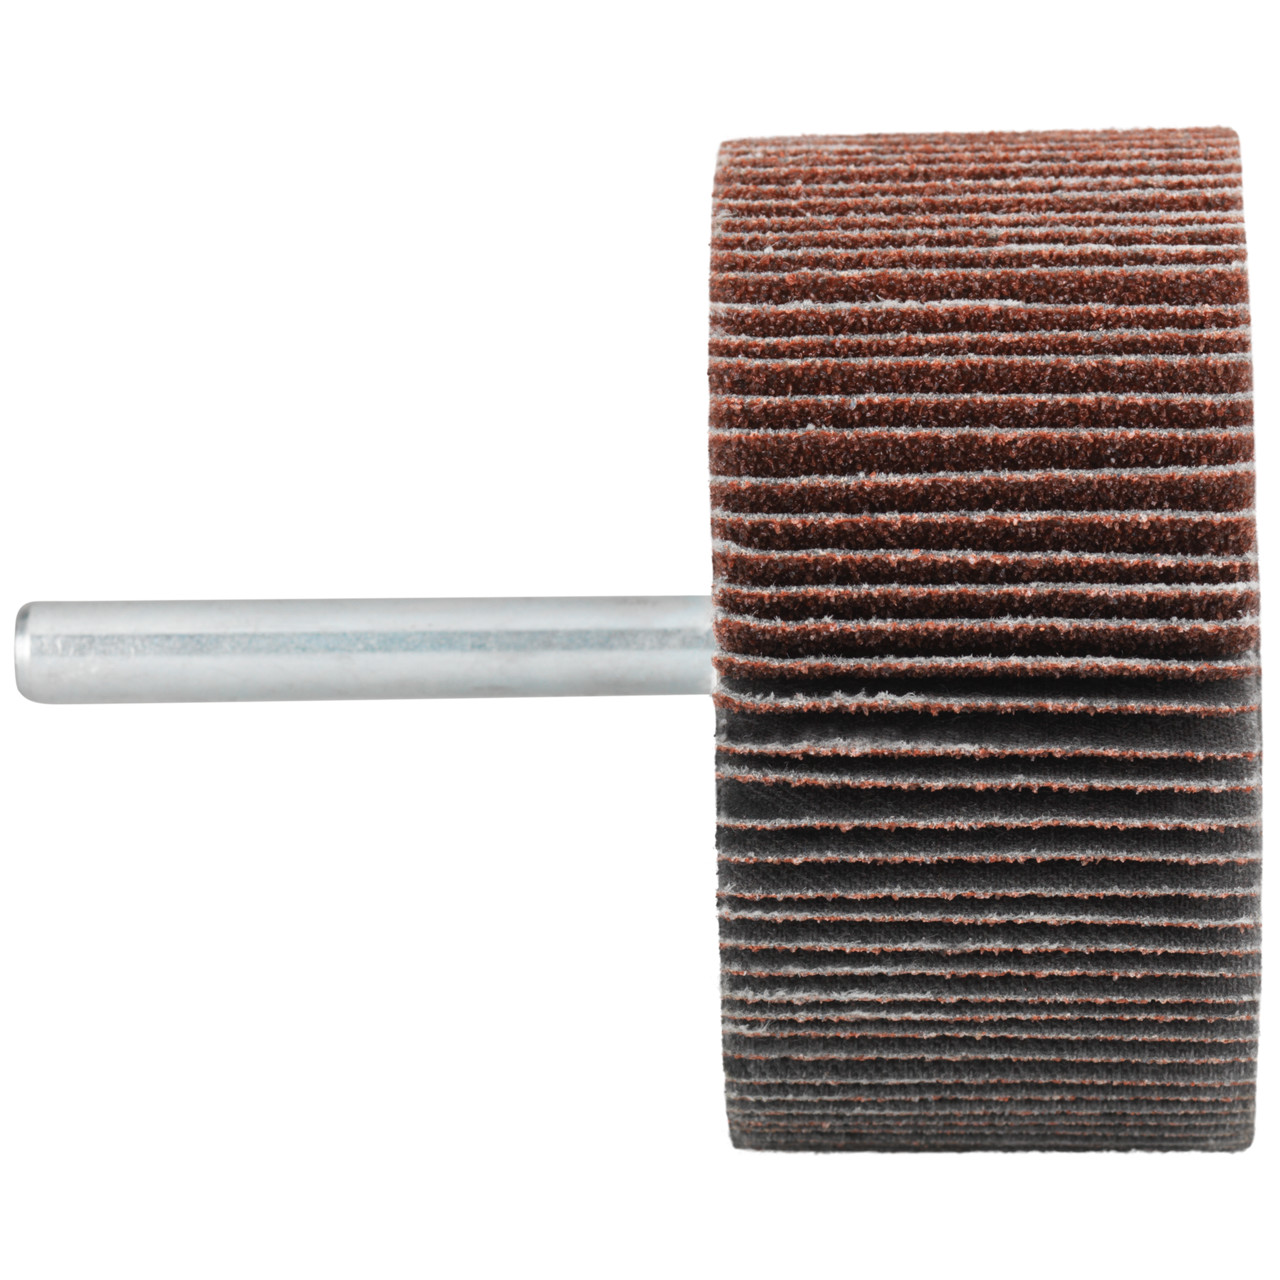 Tyrolit A-P01 C X Perni DxD 60x40 Per acciaio, acciaio inox e metalli non ferrosi, P240, forma: 52LA, Art. 816969